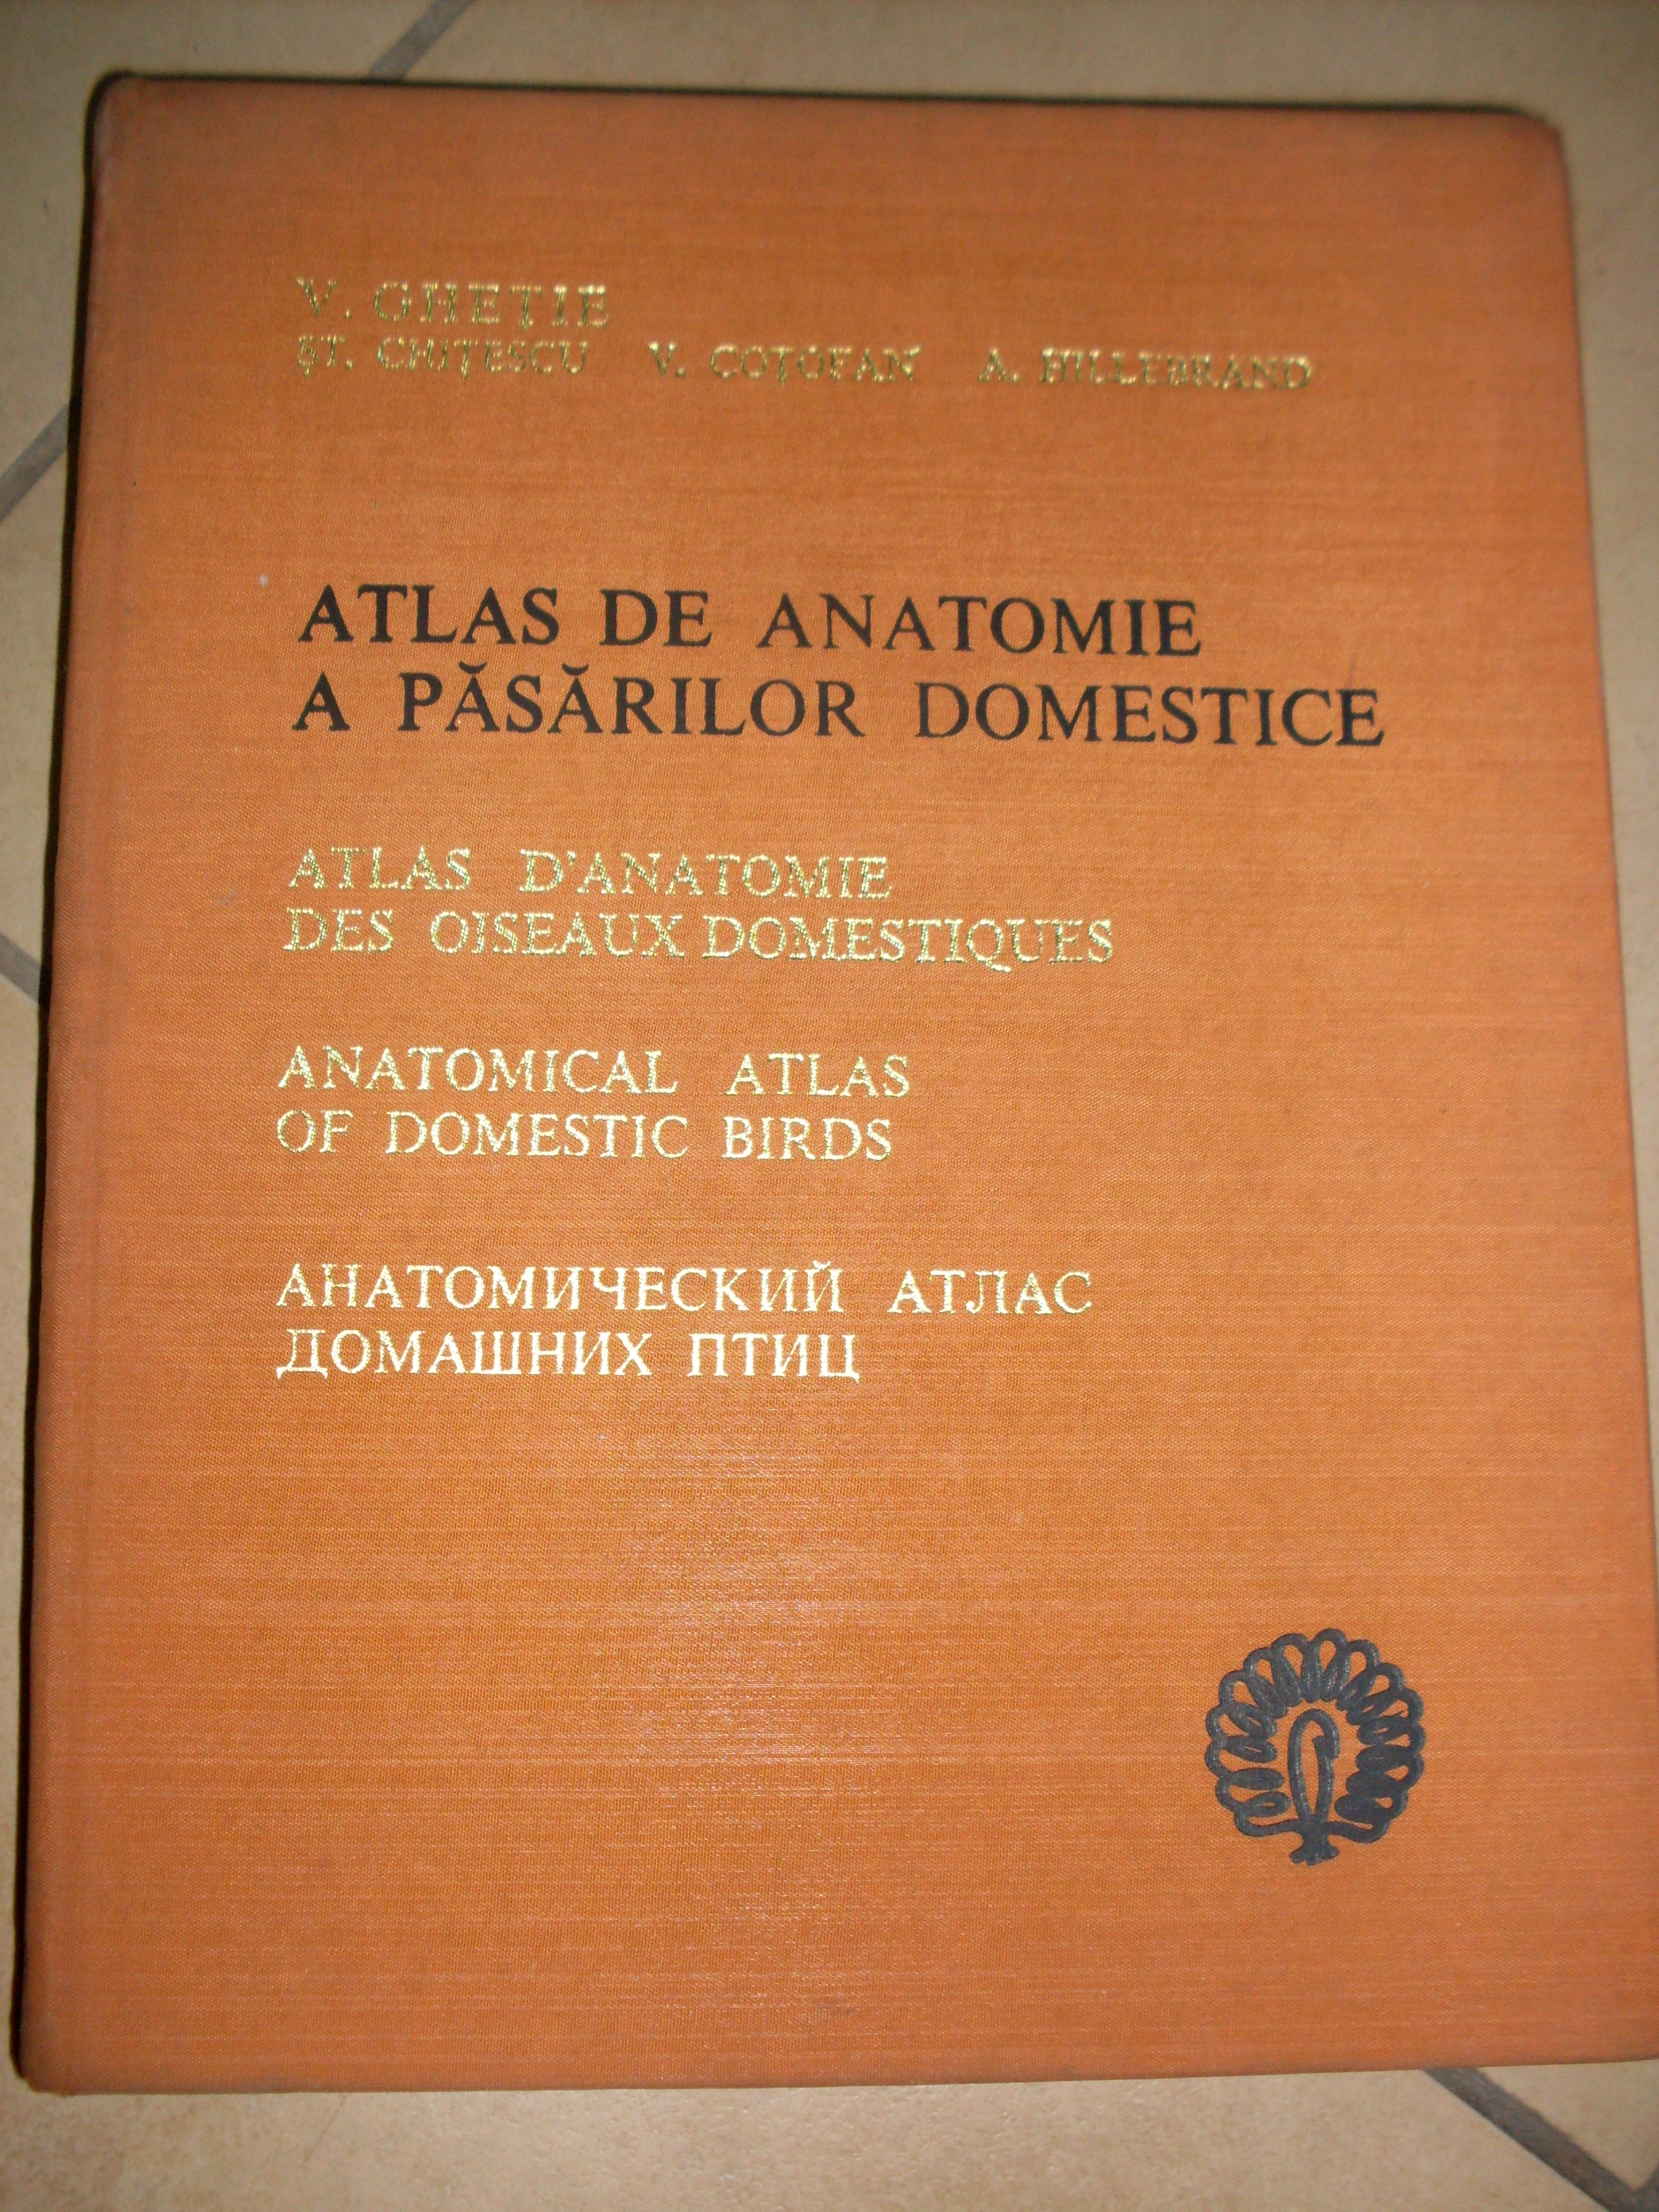 atlas de anatome a pasarilor domestice                                                               v. ghetie, v. cotofan, a. hillebrand                                                                